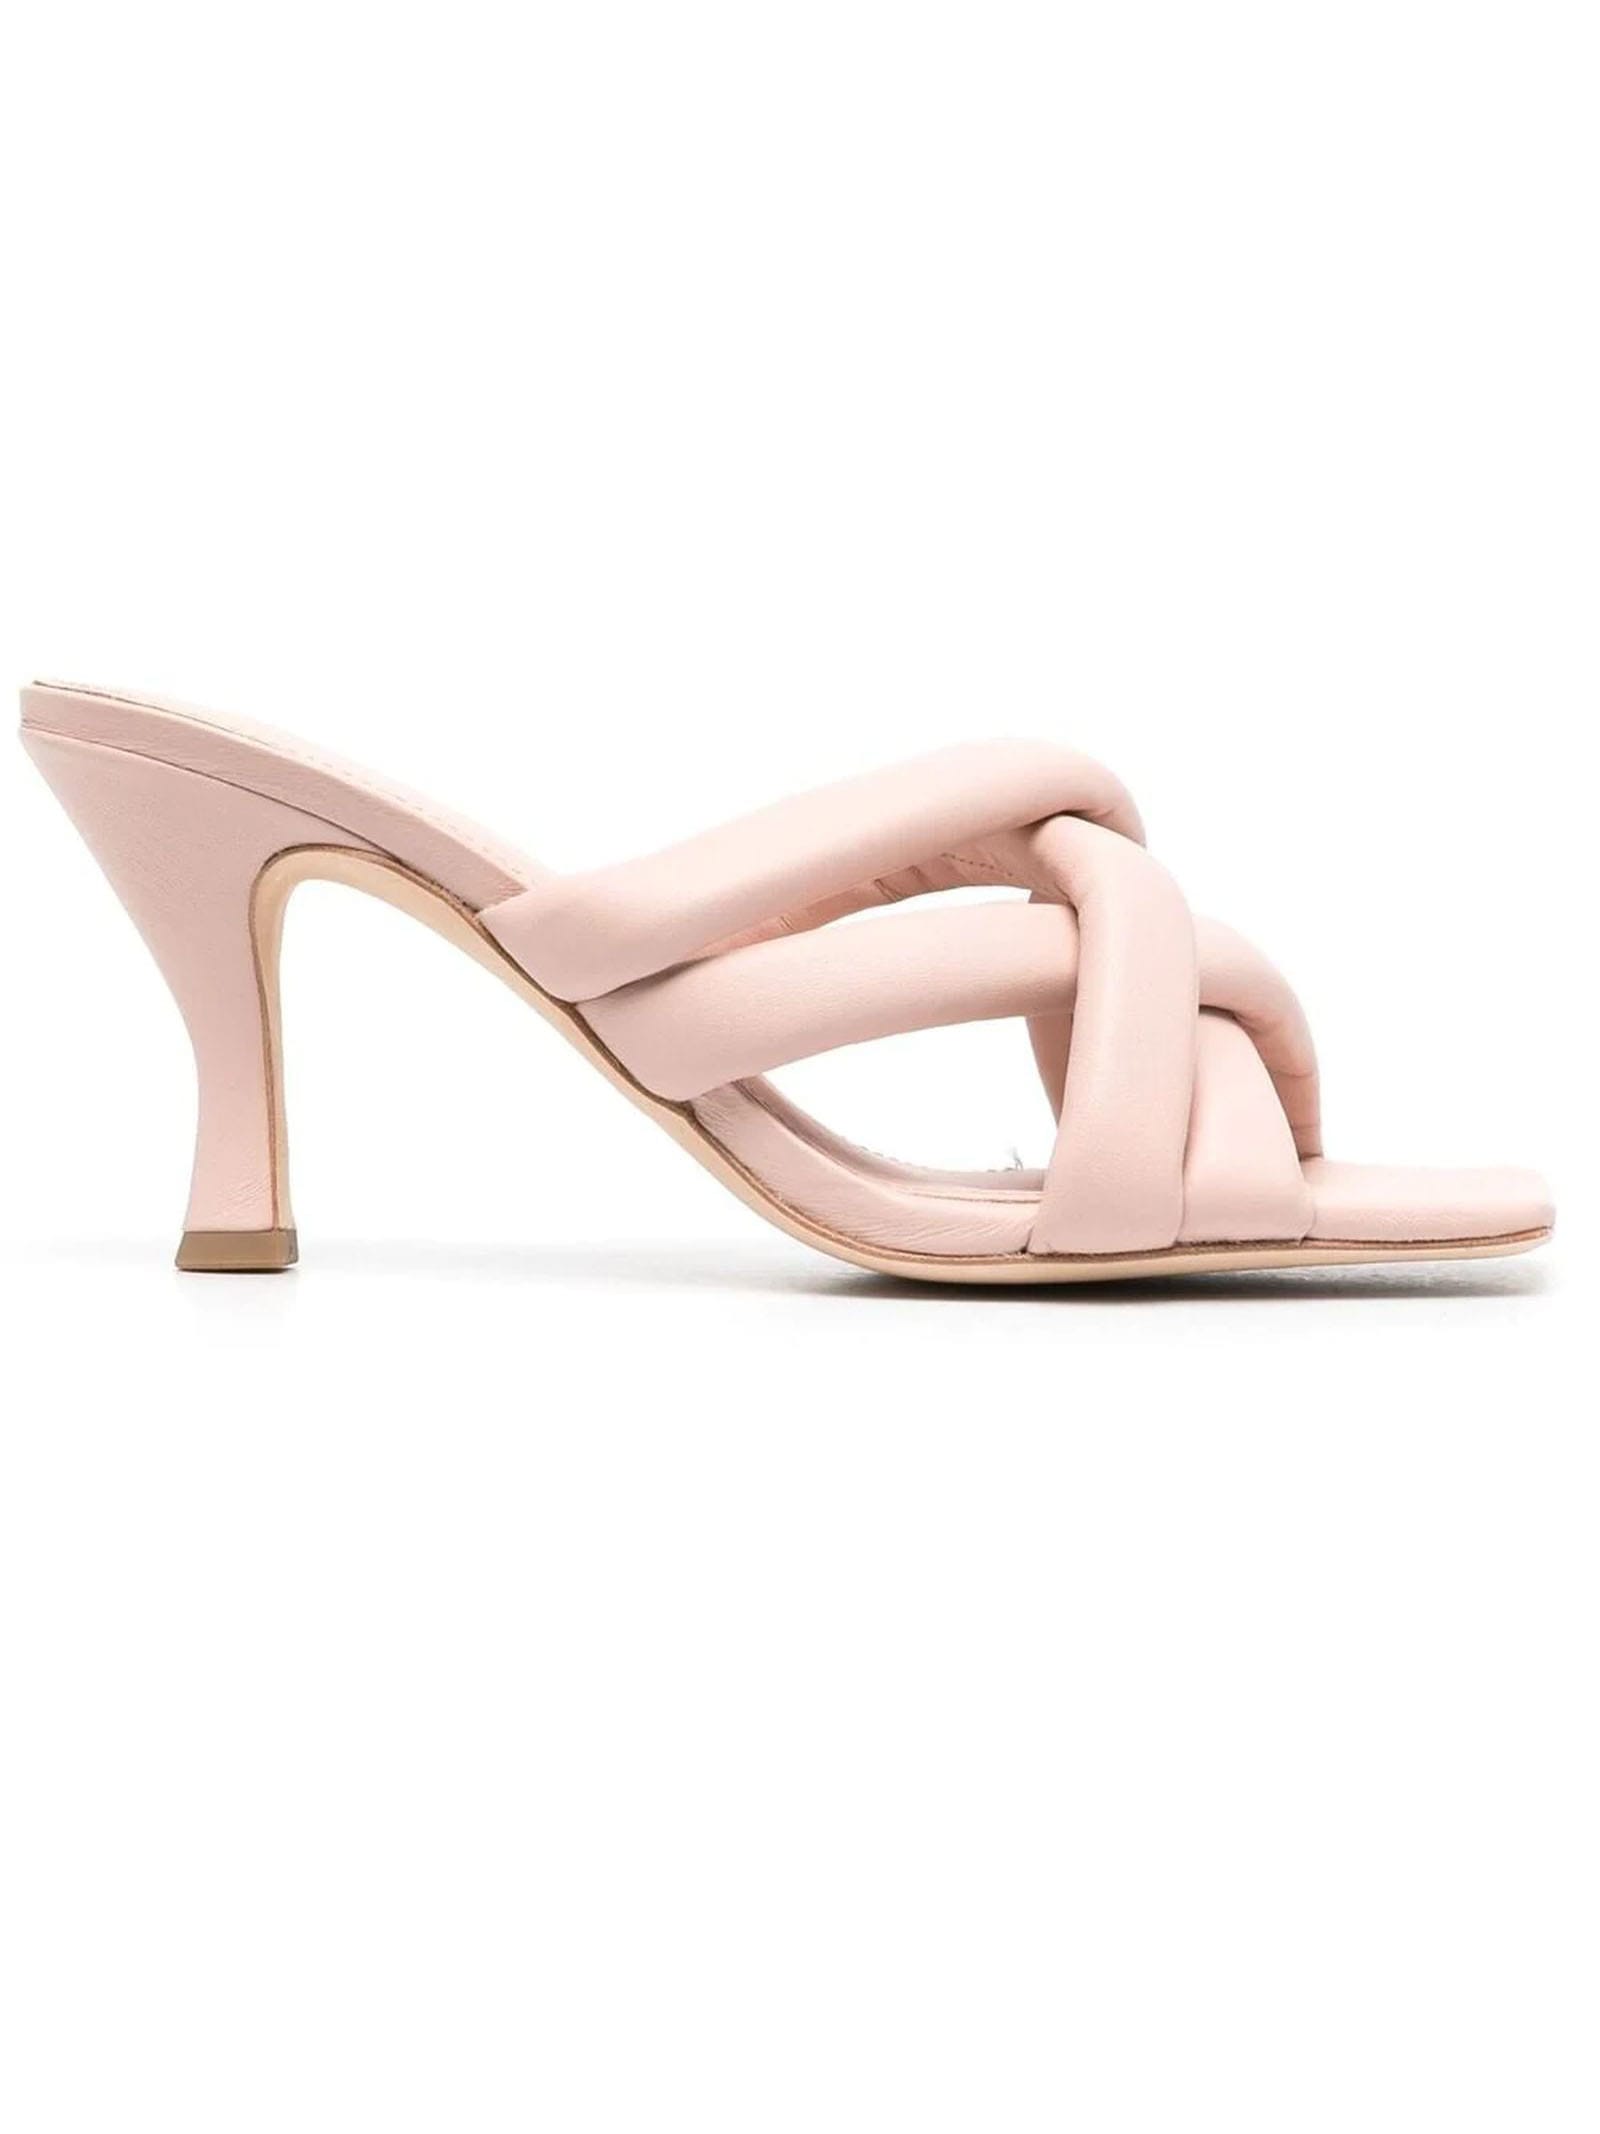 Ash Pink Leather Mina Sandals